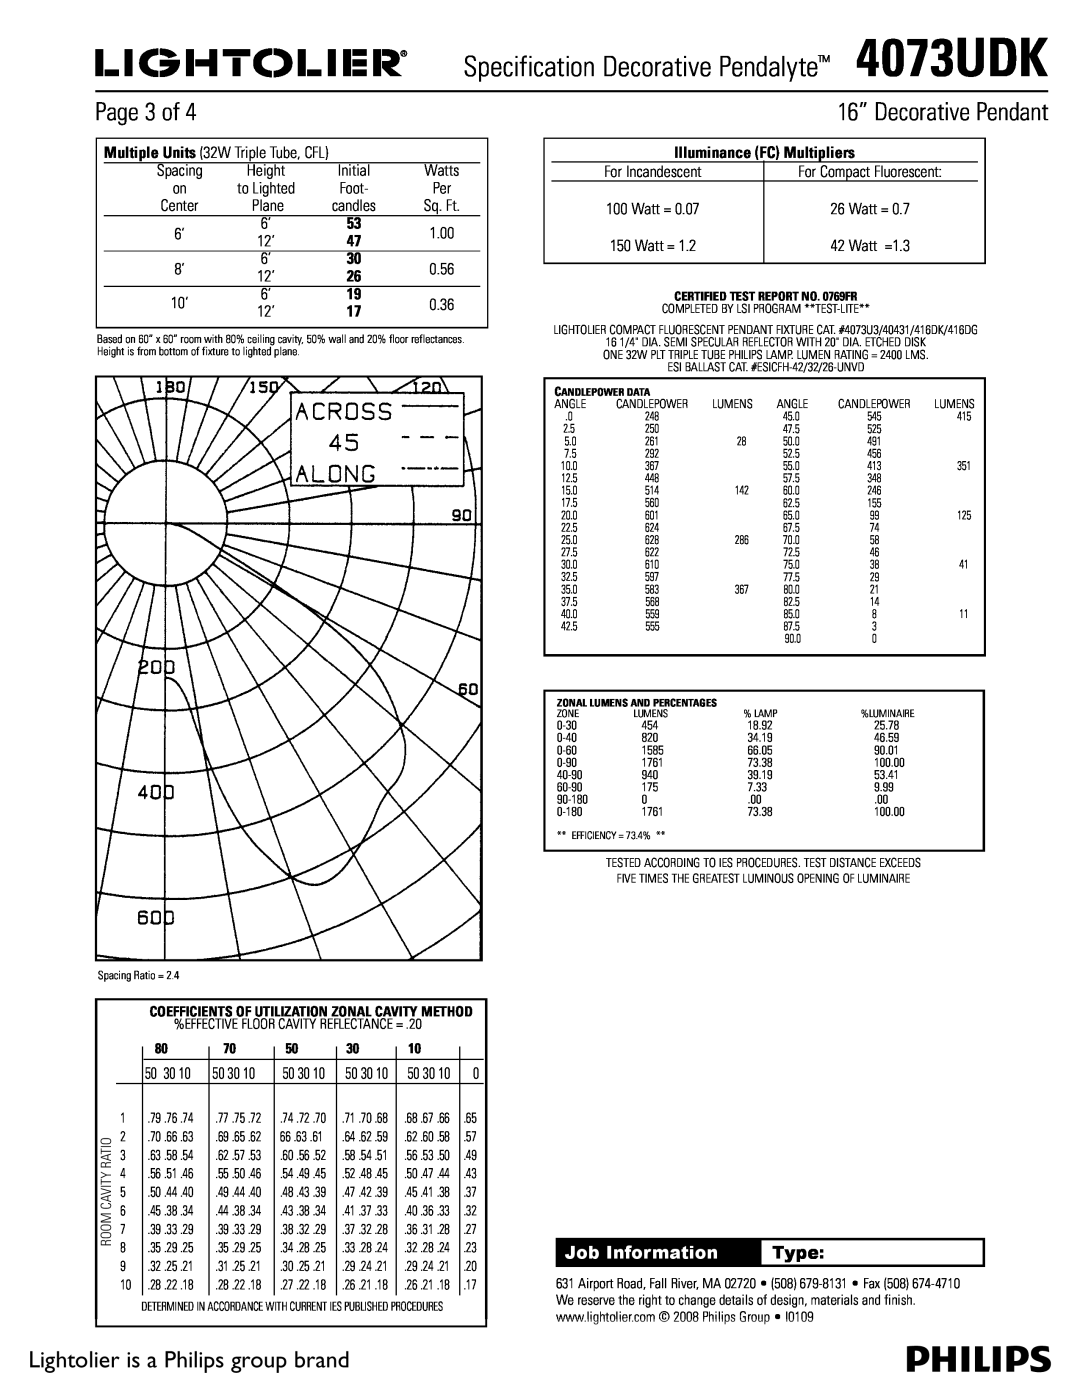 Lightolier 4073UDK Page 3 of, 16” Decorative Pendant, Plane, Illuminance FC Multipliers, Job Information, Type 